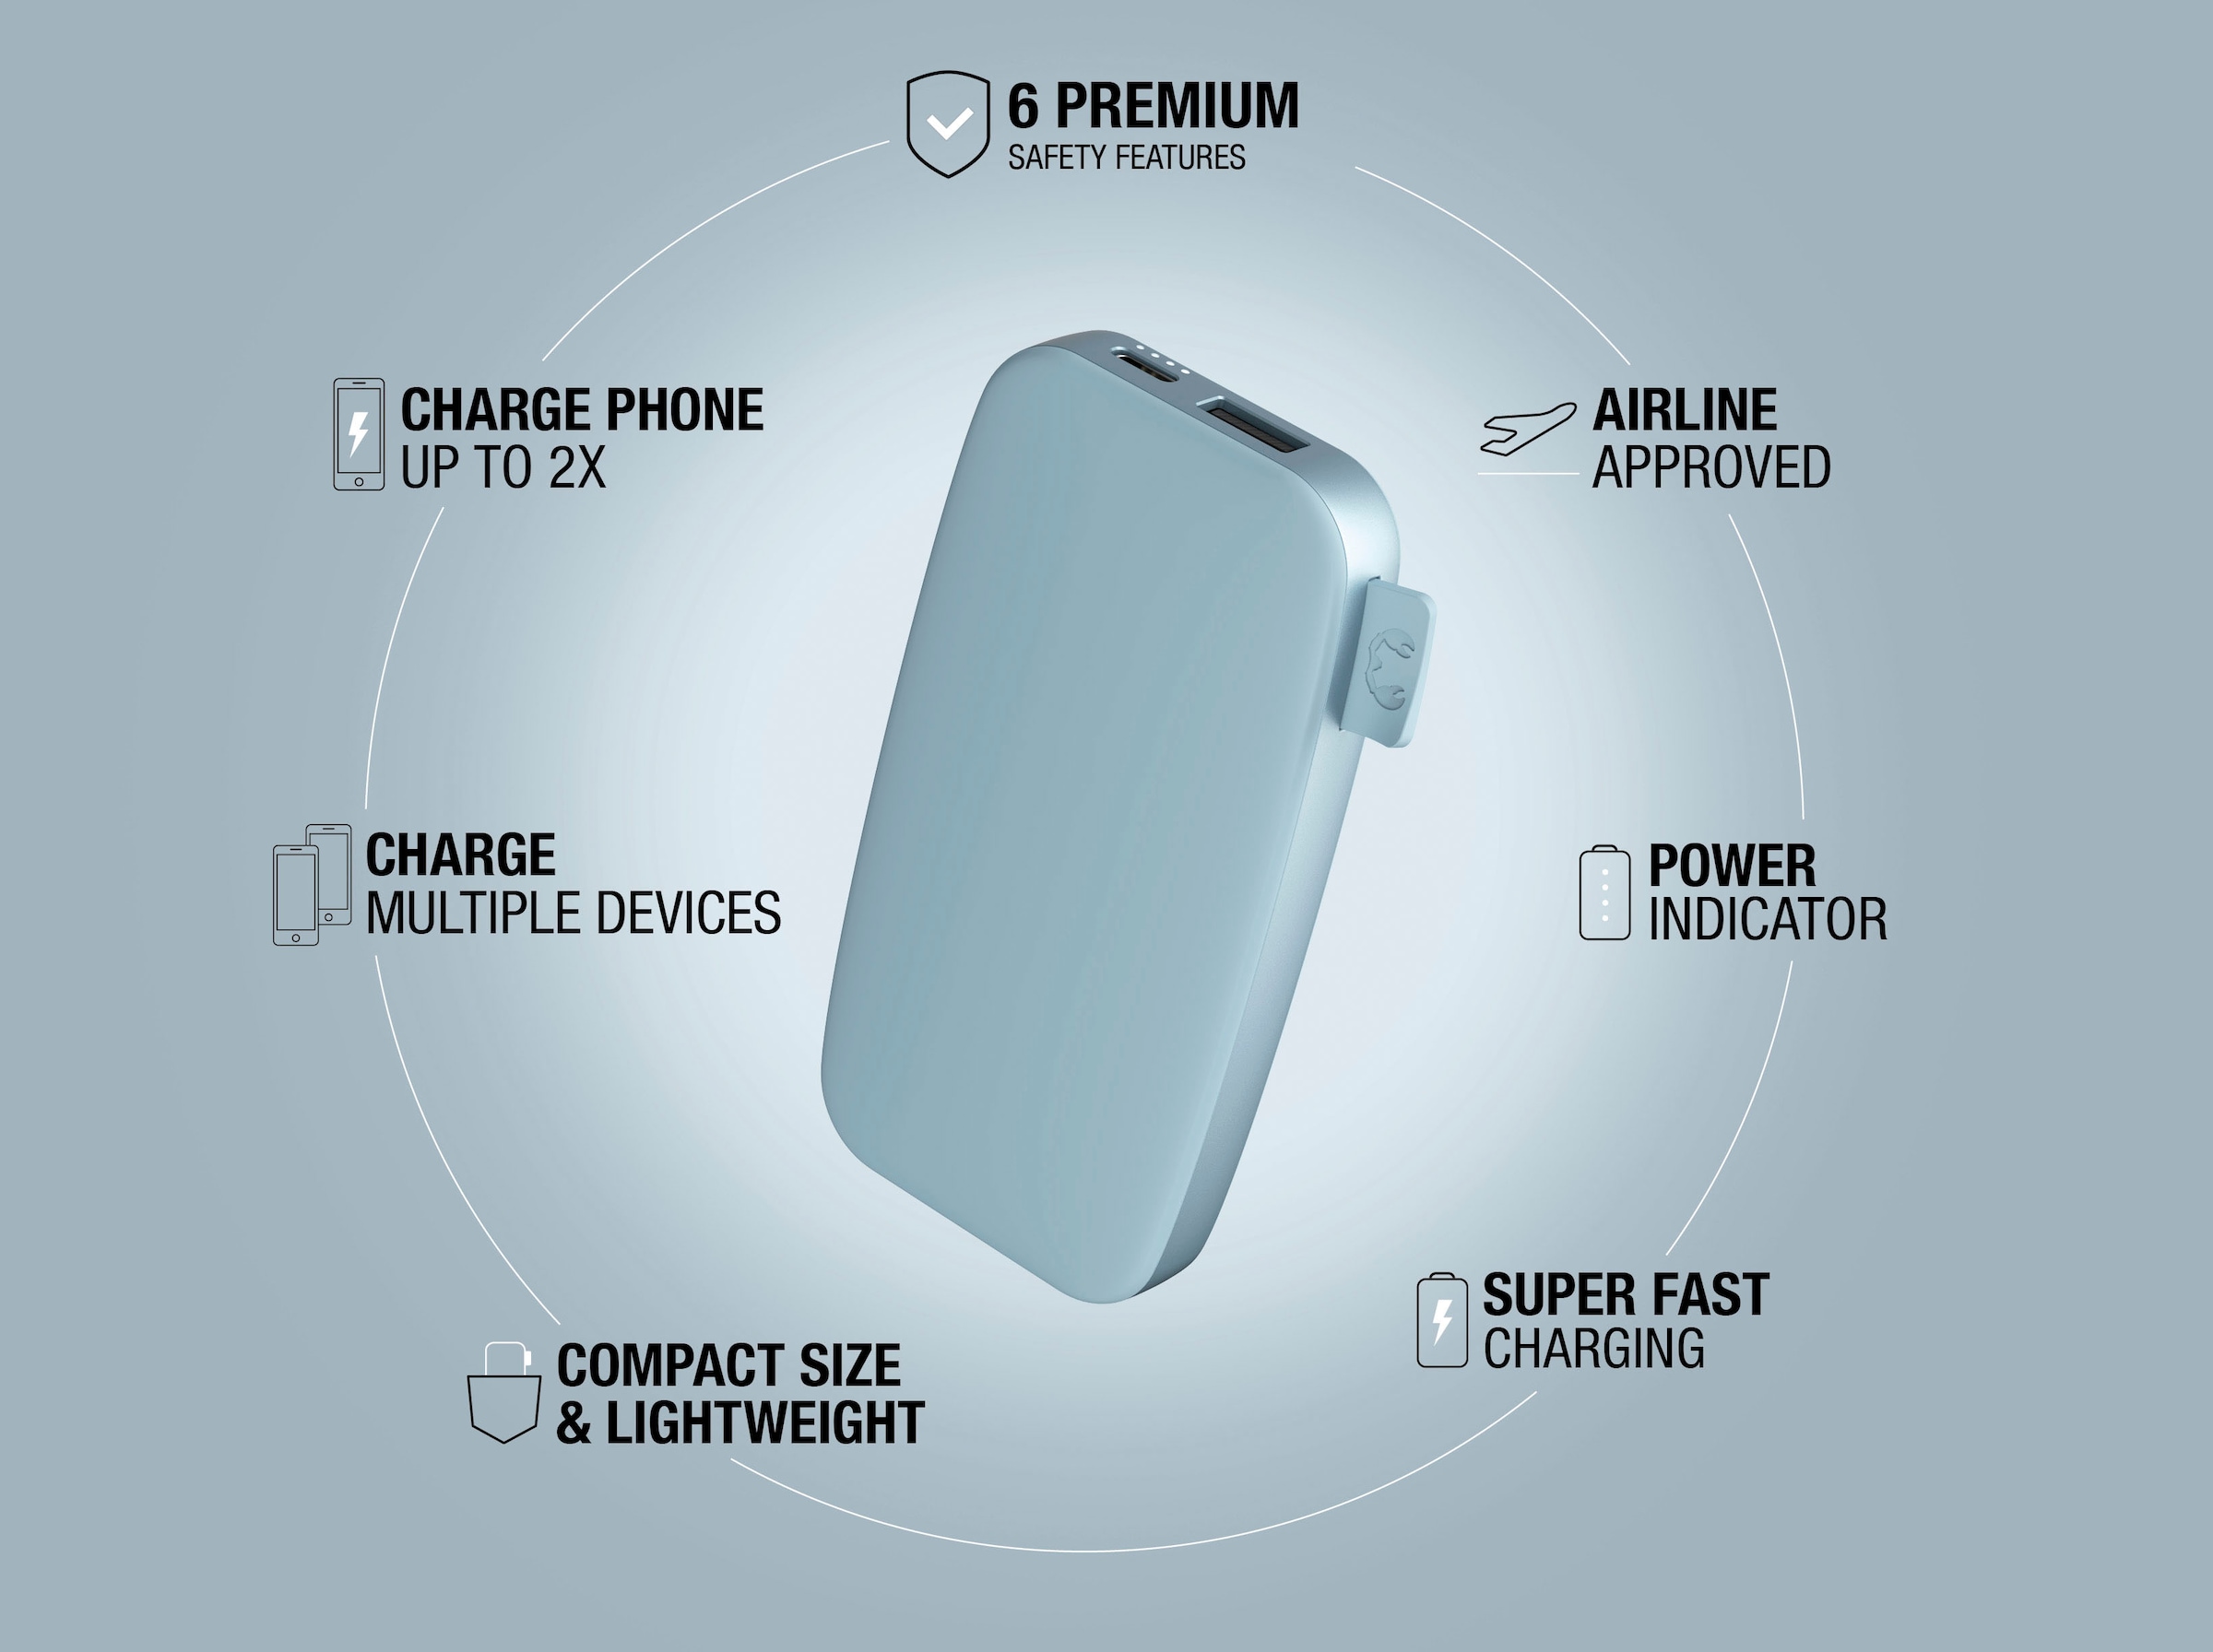 Fresh´n Rebel Powerbank »Power Pack 6000mAh mit USB-C, Fast Charge«, 5 V ➥  3 Jahre XXL Garantie | UNIVERSAL